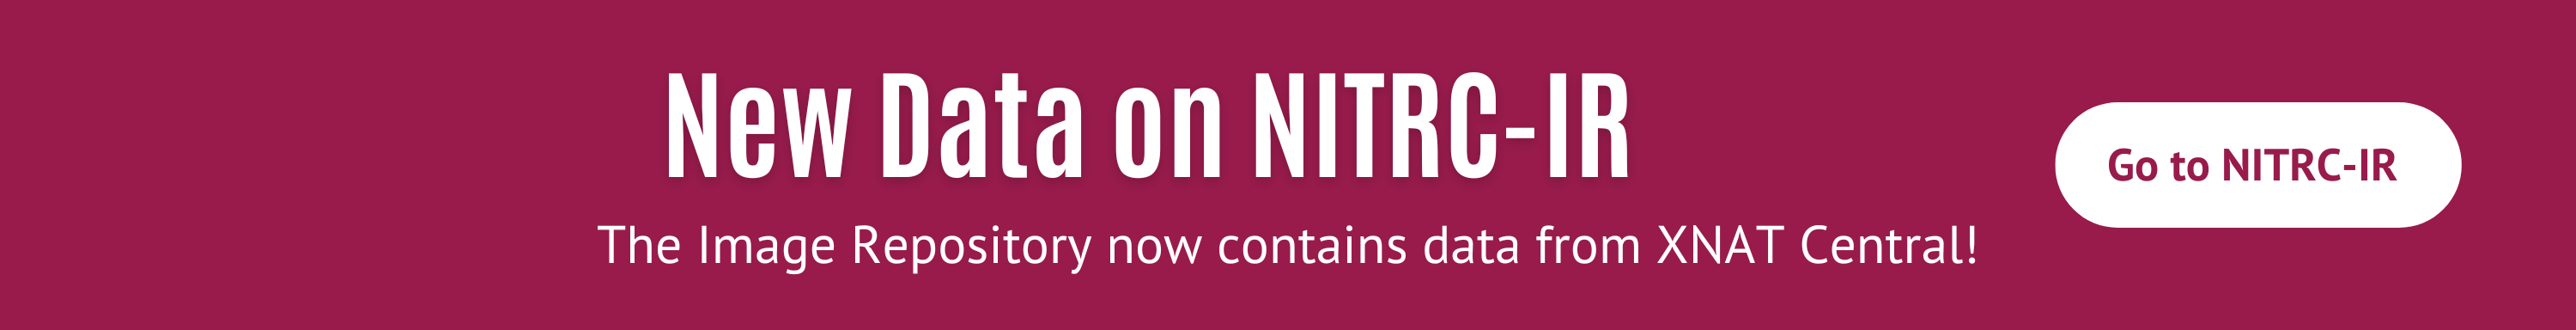 New Data on NITRC-IR